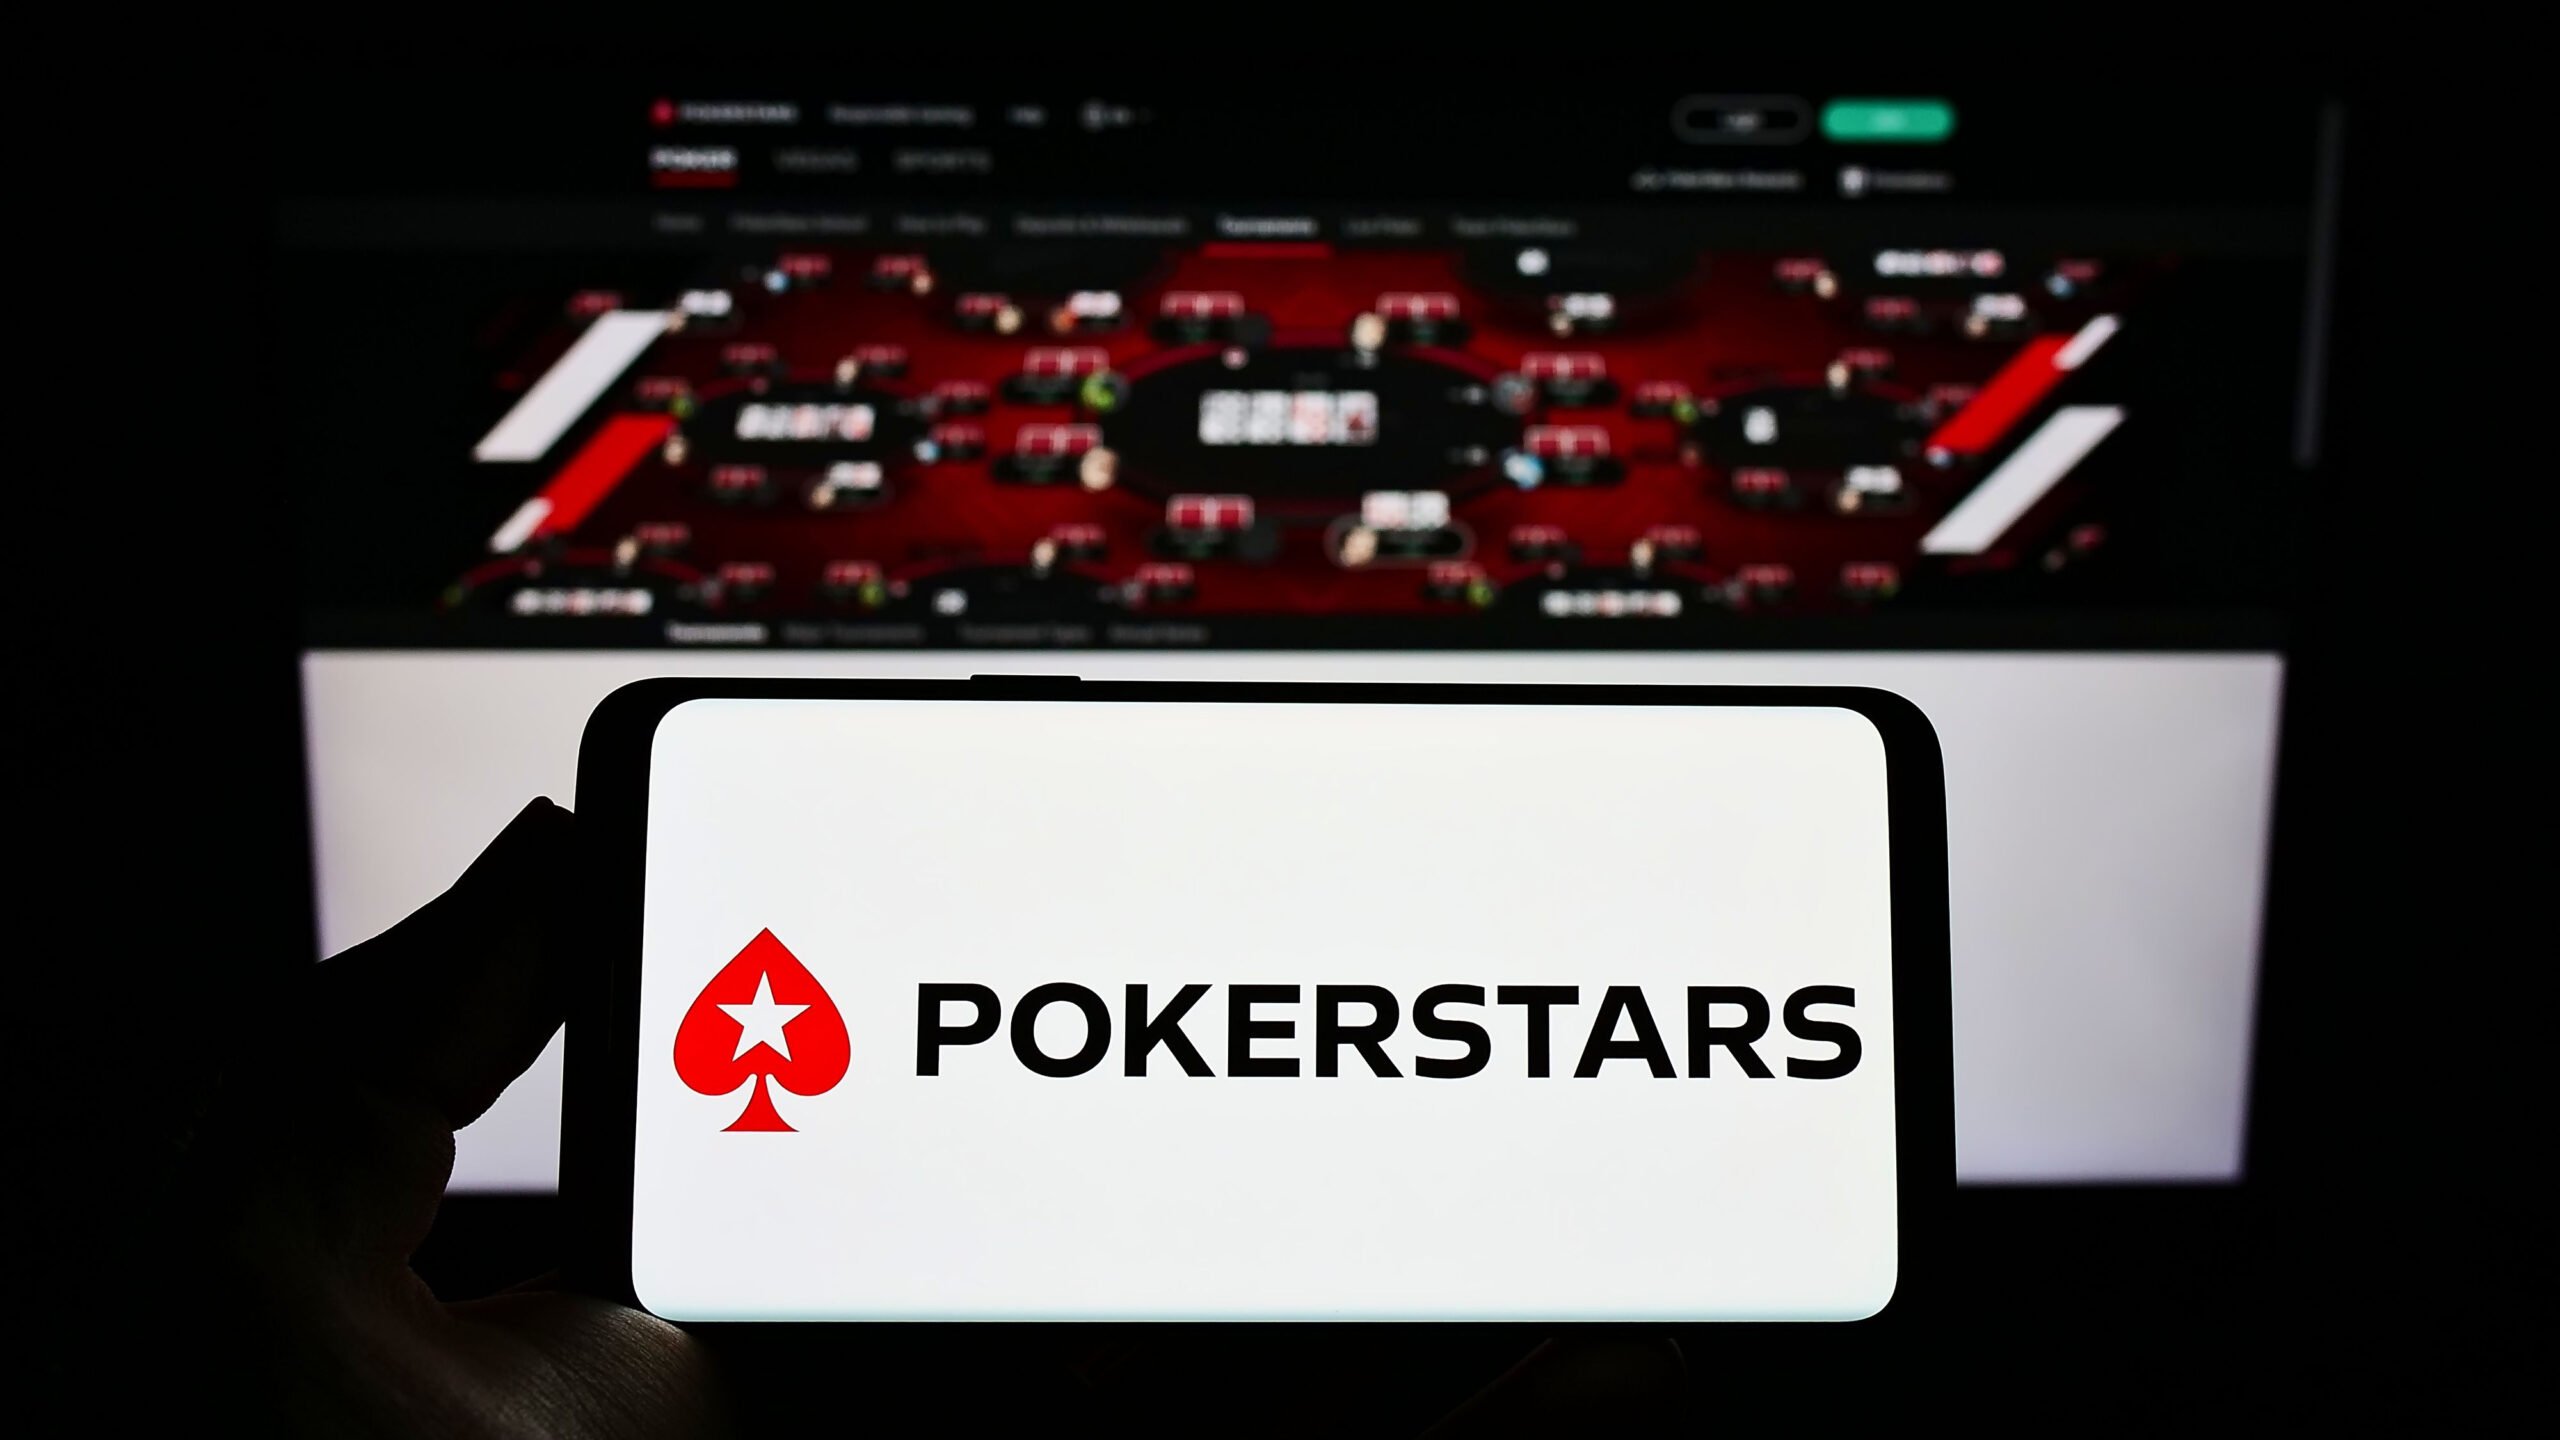 PokerStars splash screen on phone